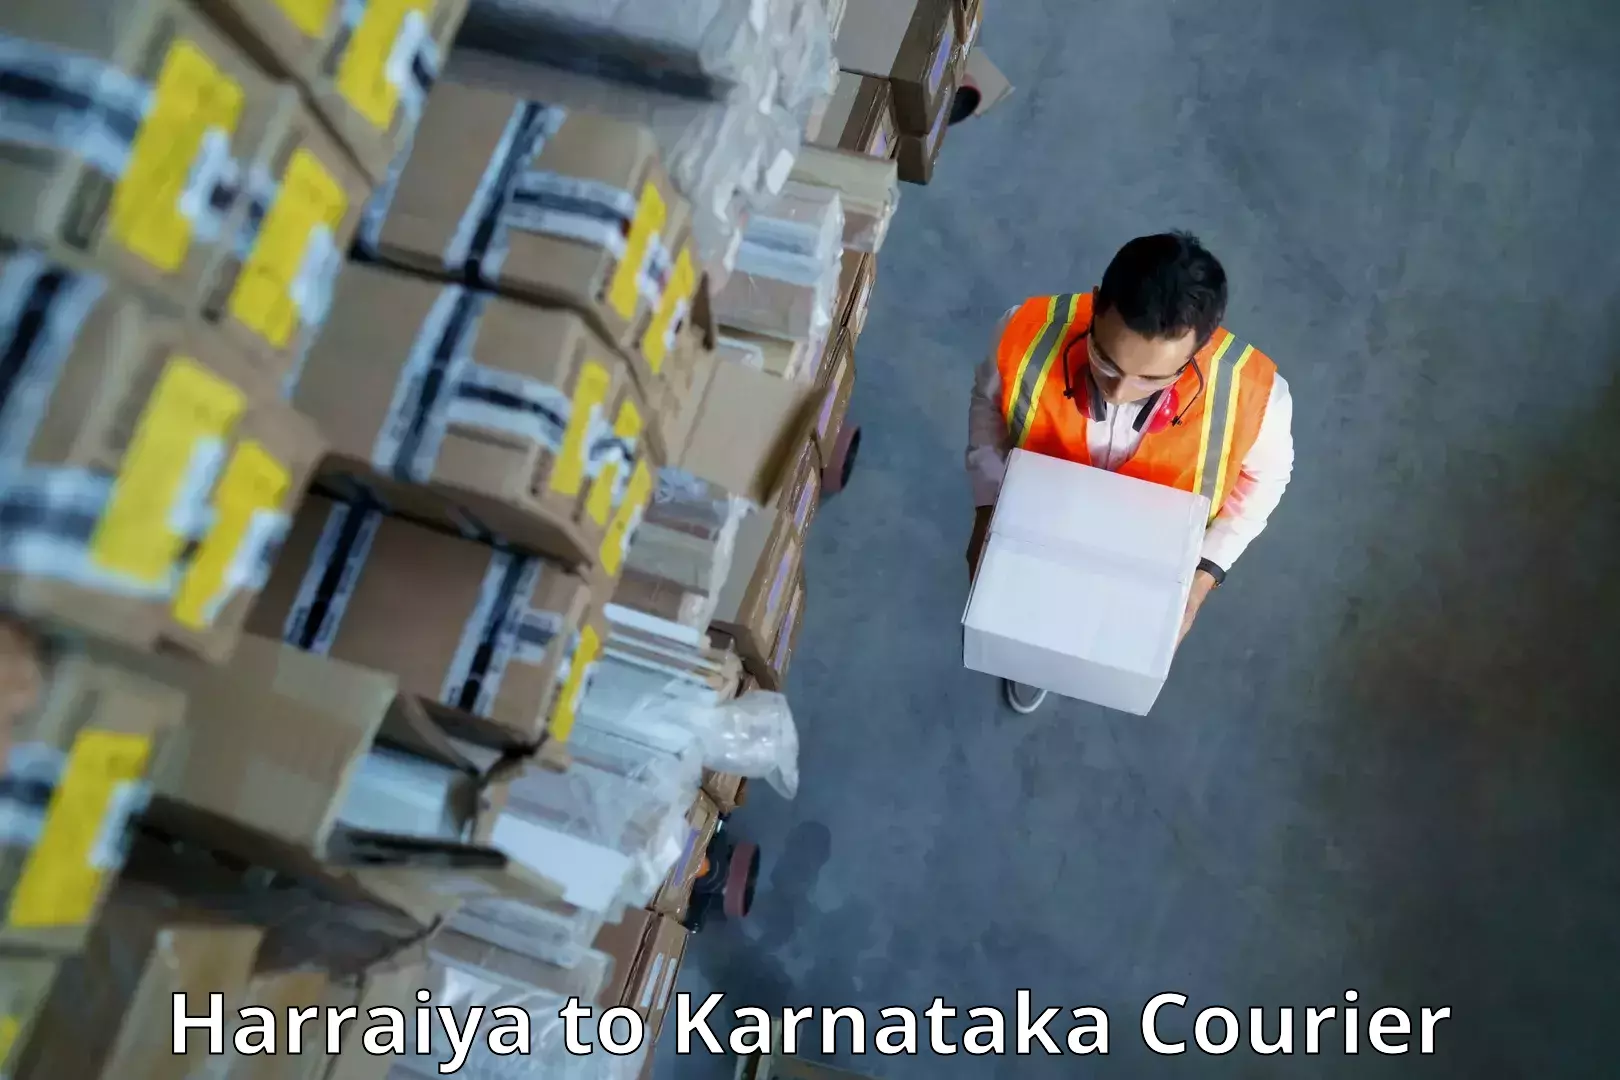 Courier service partnerships Harraiya to Devanahalli